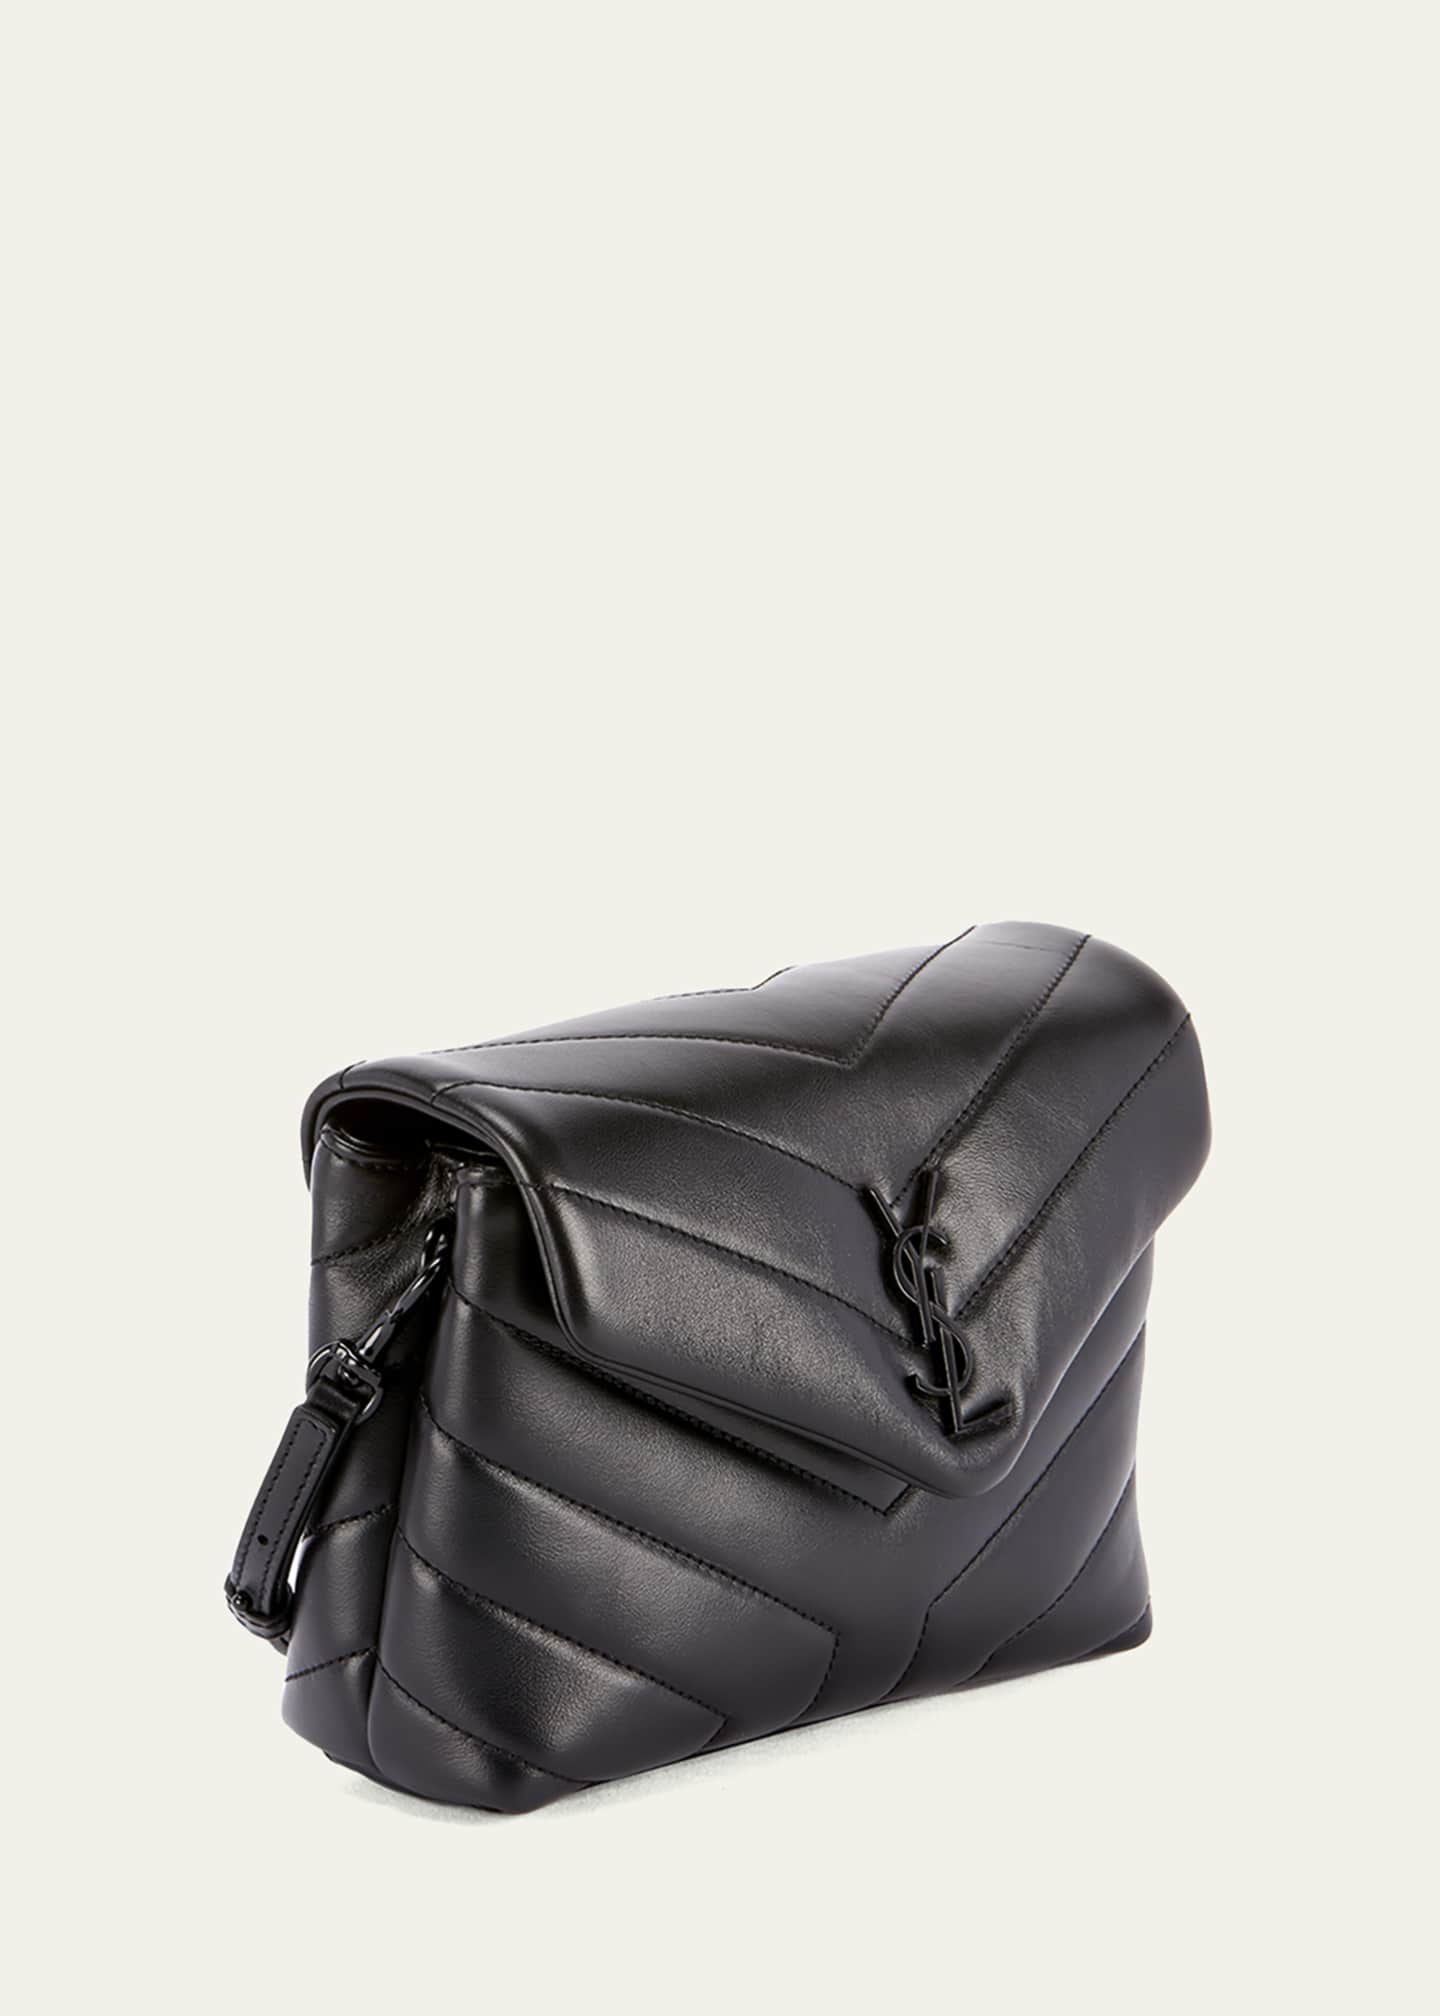 Saint Laurent Loulou Toy Leather Crossbody Bag